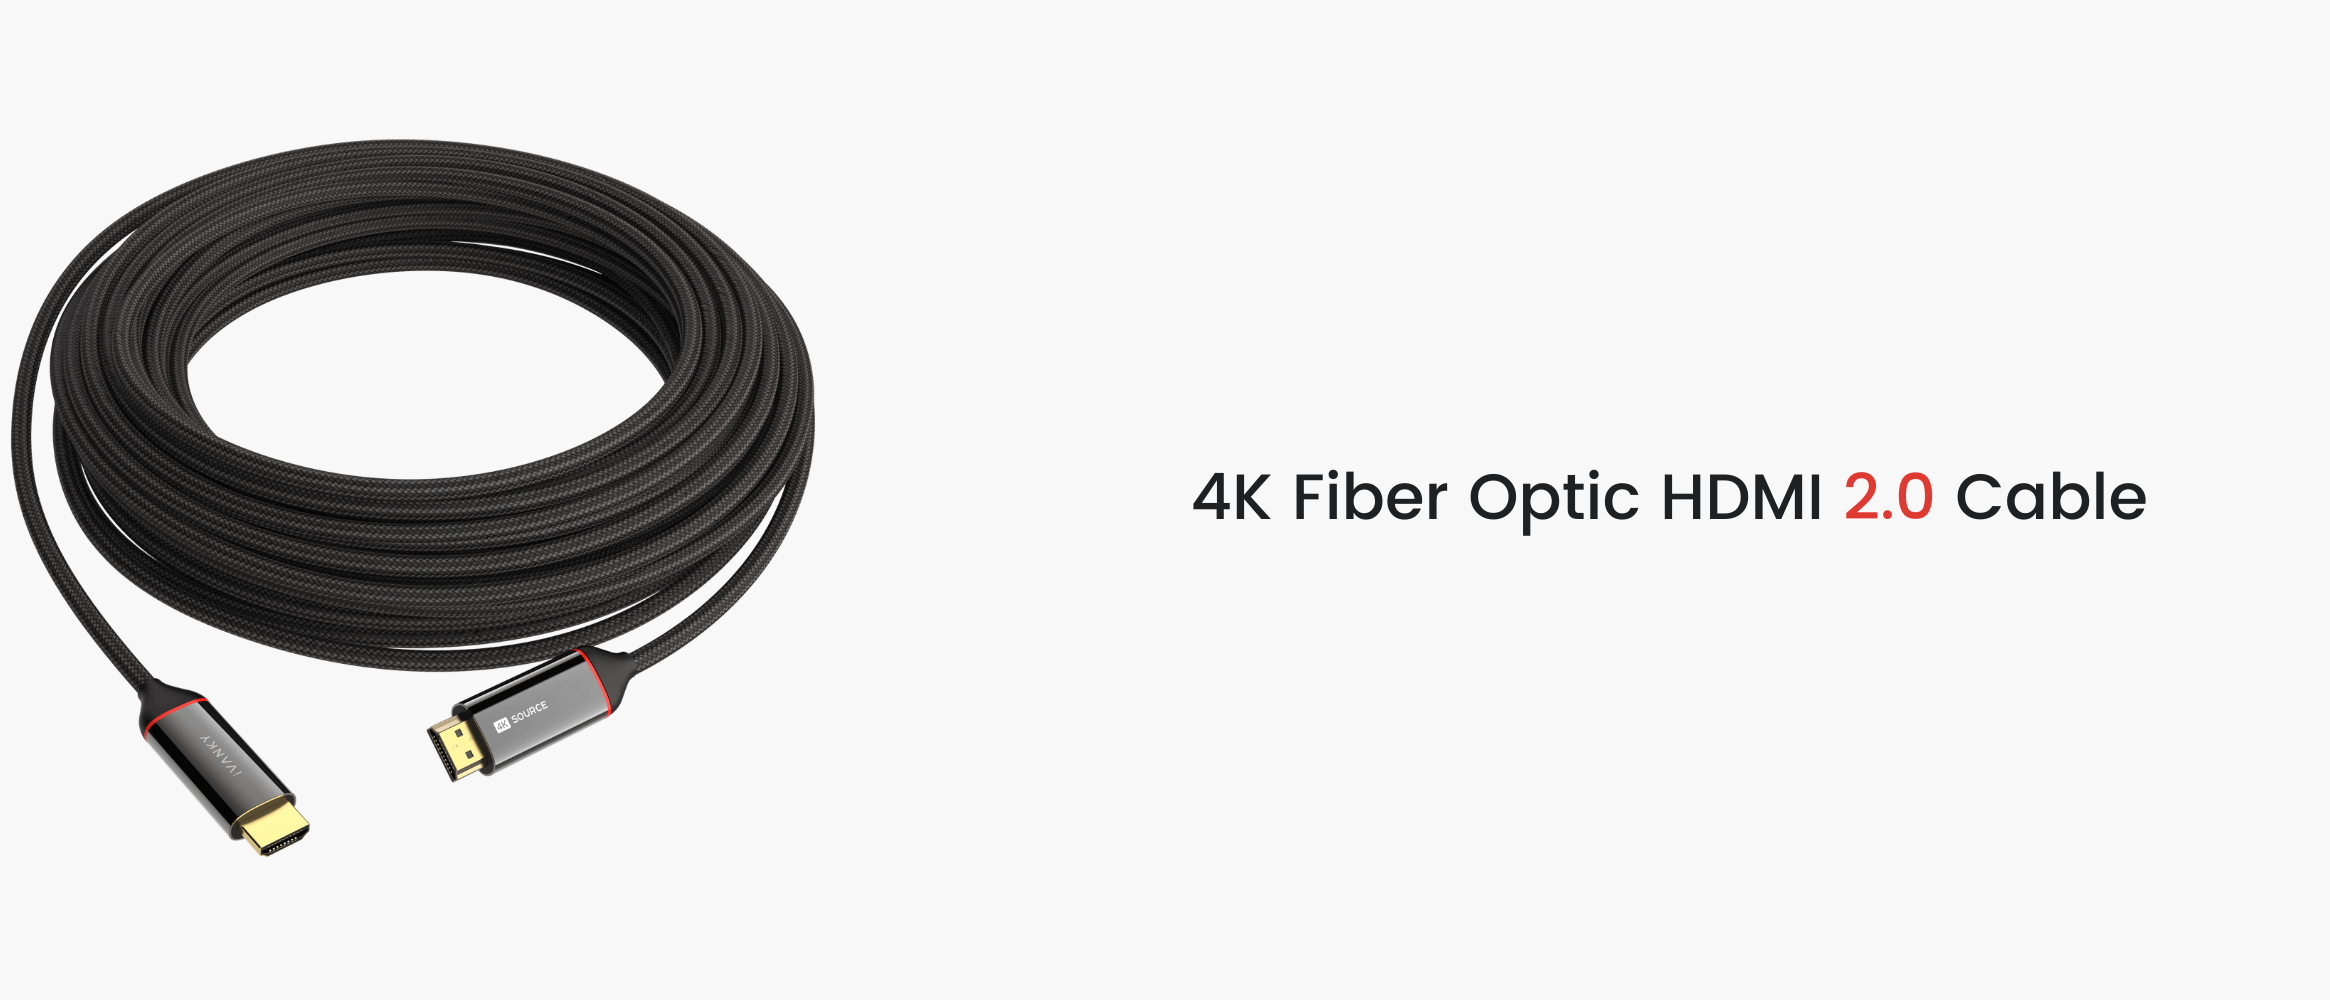 4K Fiber Optic HDMI 2.0 Cable - Braided